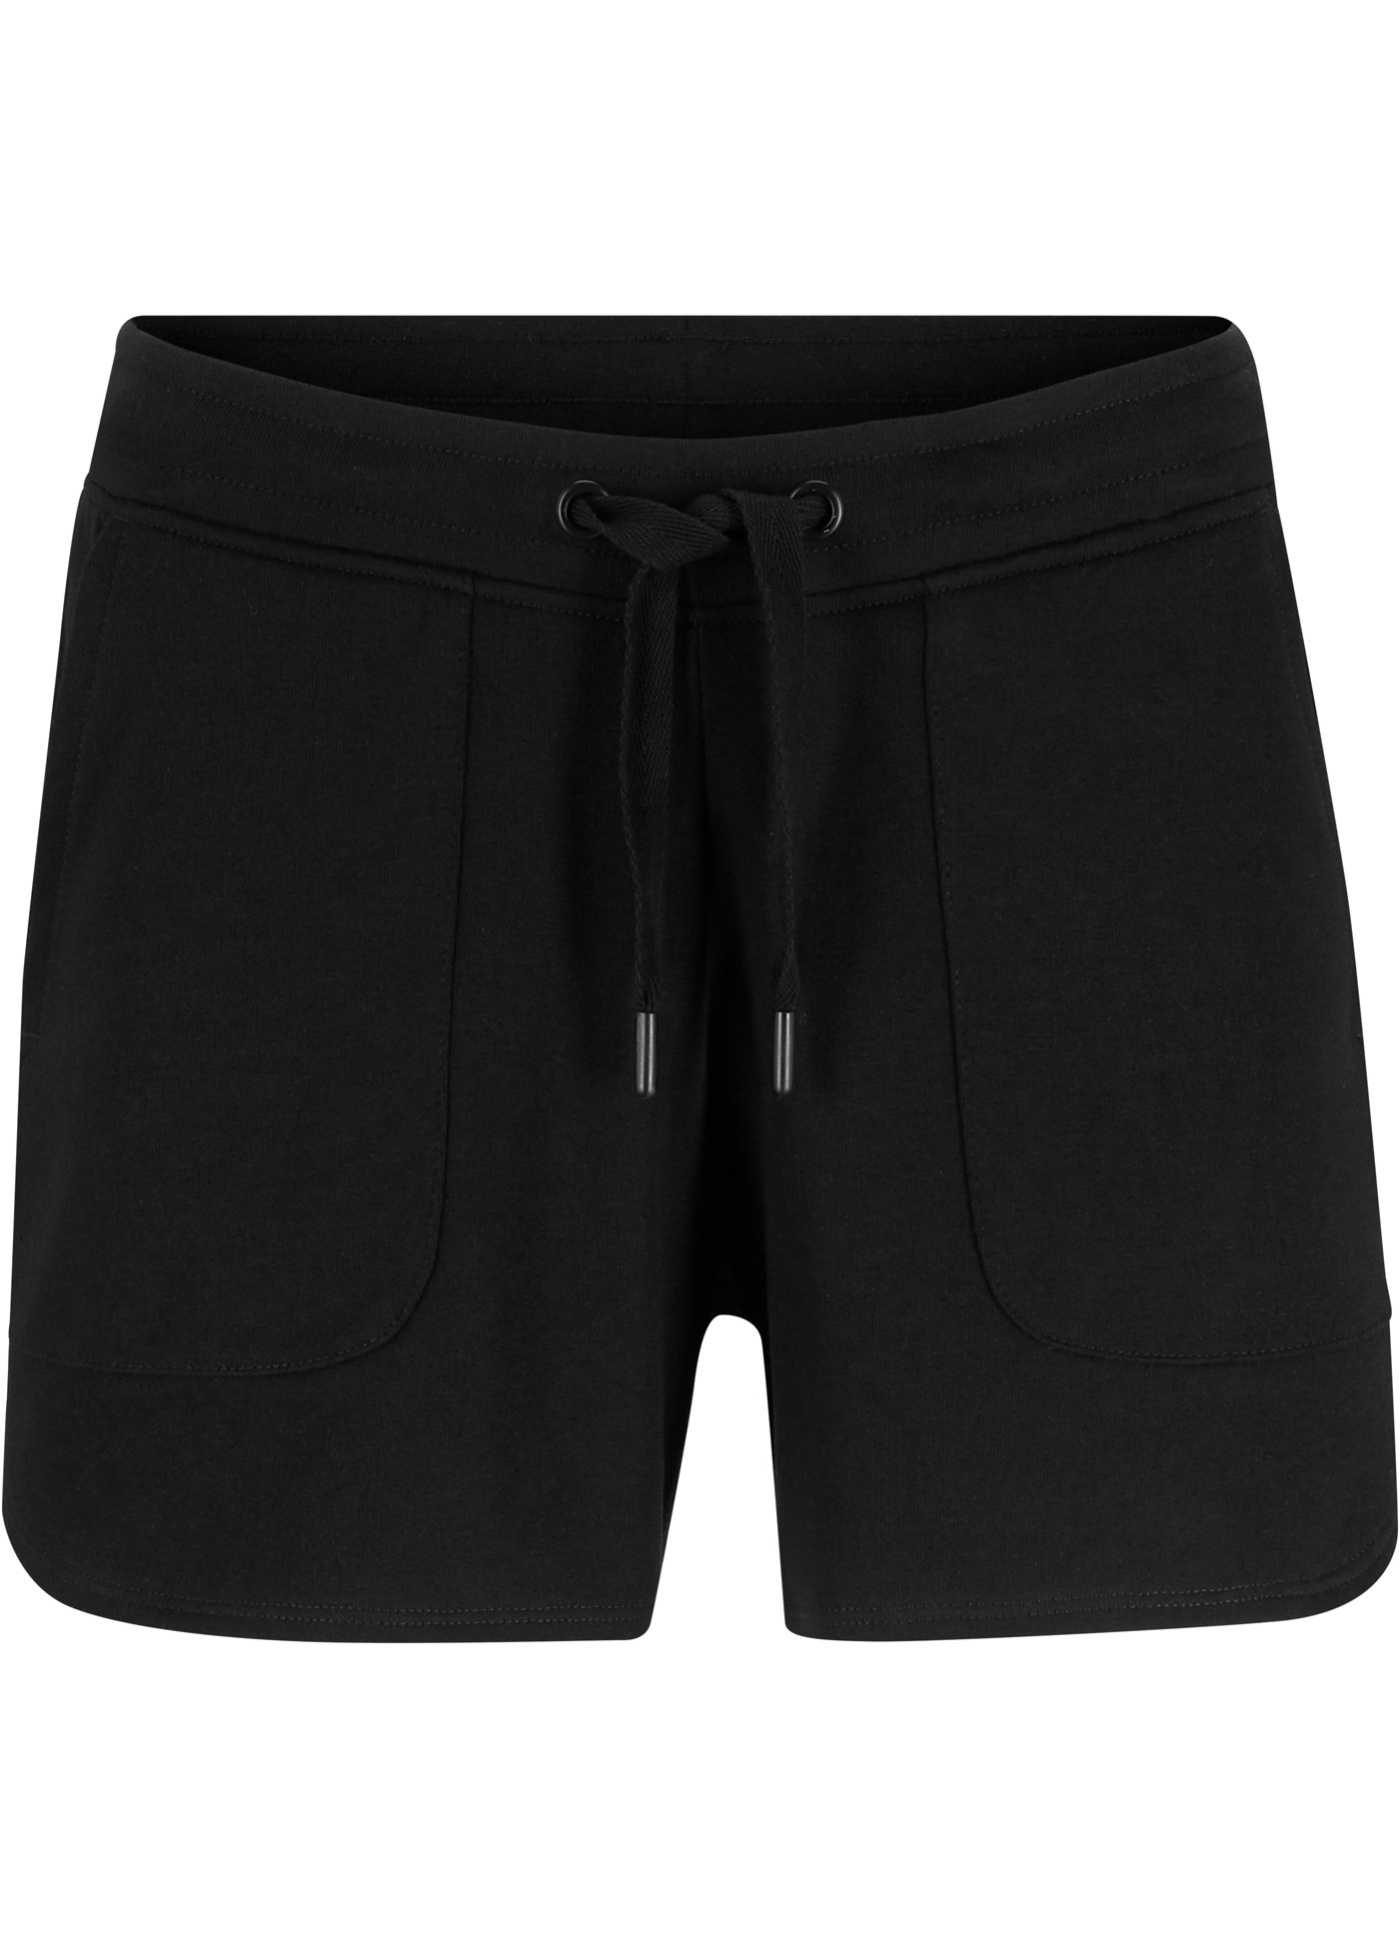 Shorts in felpa con coulisse (Nero) - bpc bonprix collection